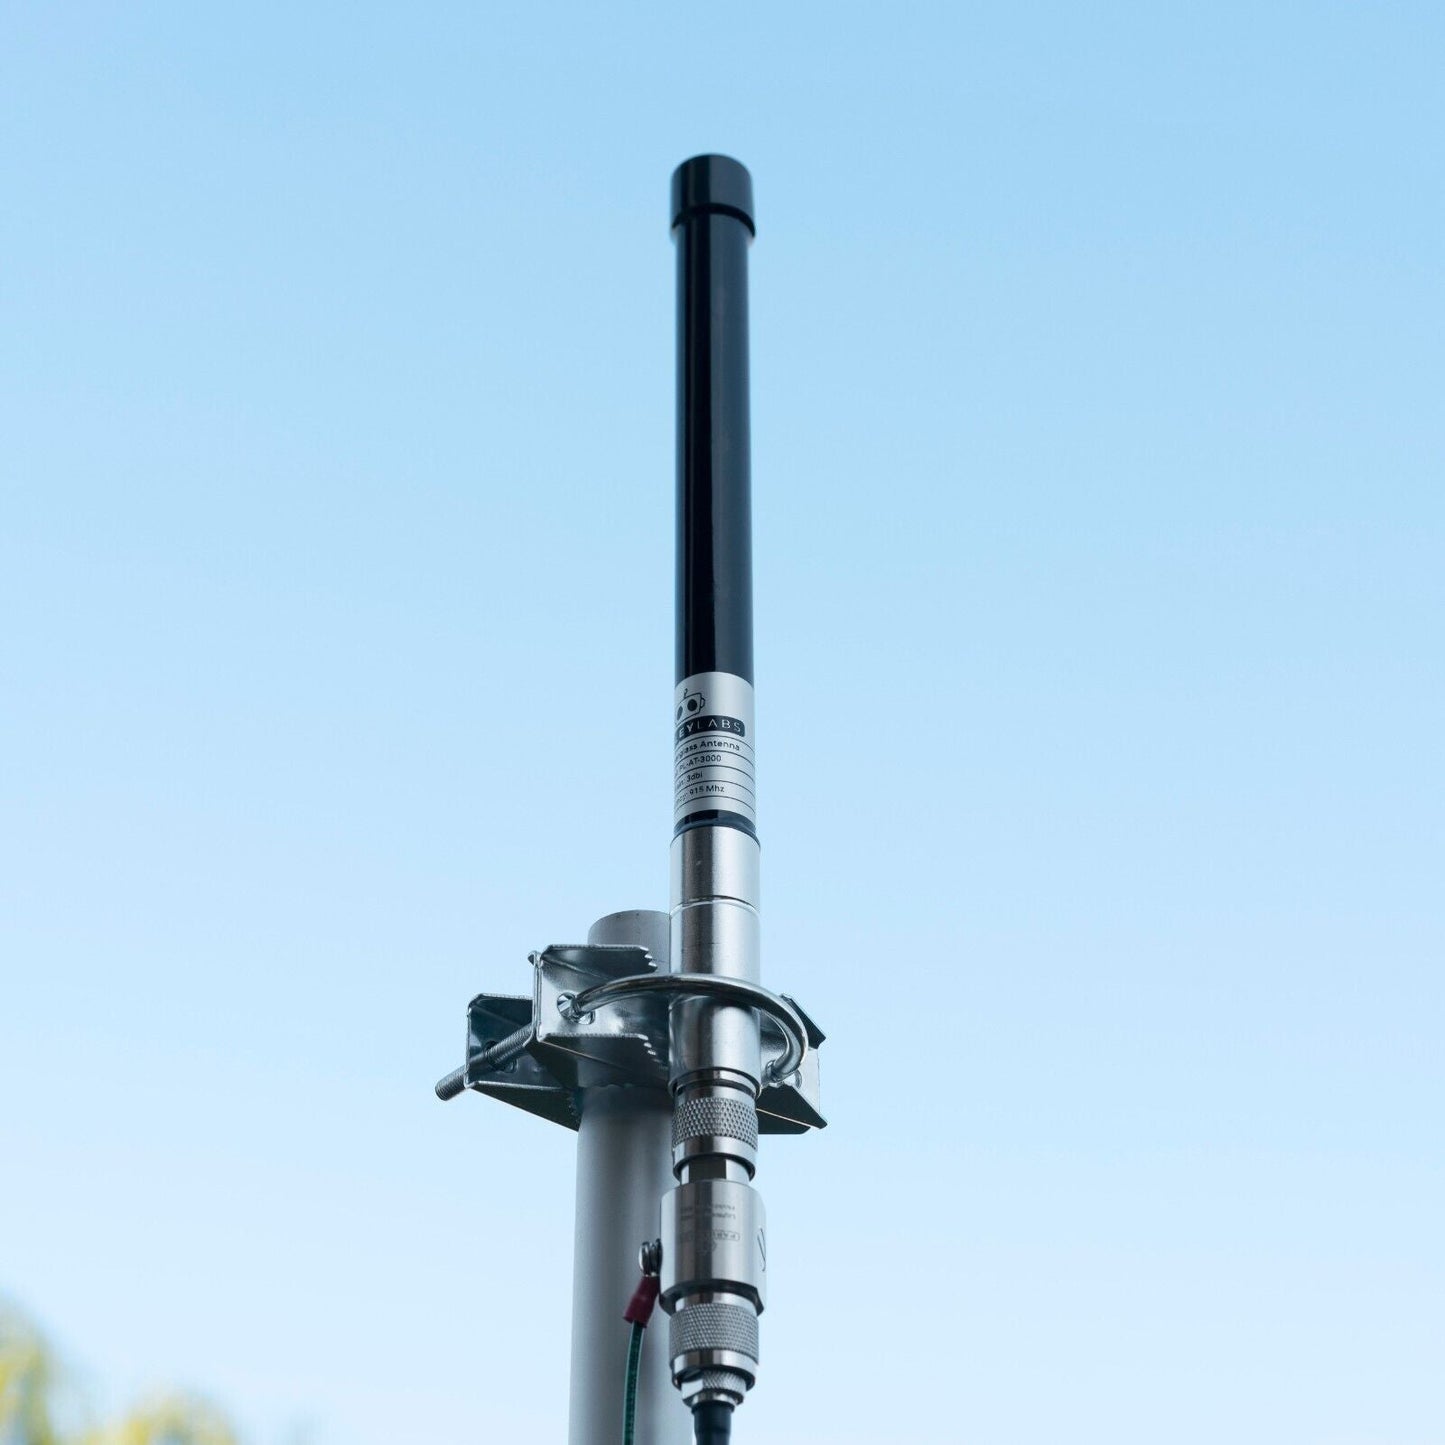 3dBi Fiberglass Antenna (868-915 MHz) - Black (Case of 16 Units) - Mapping Network